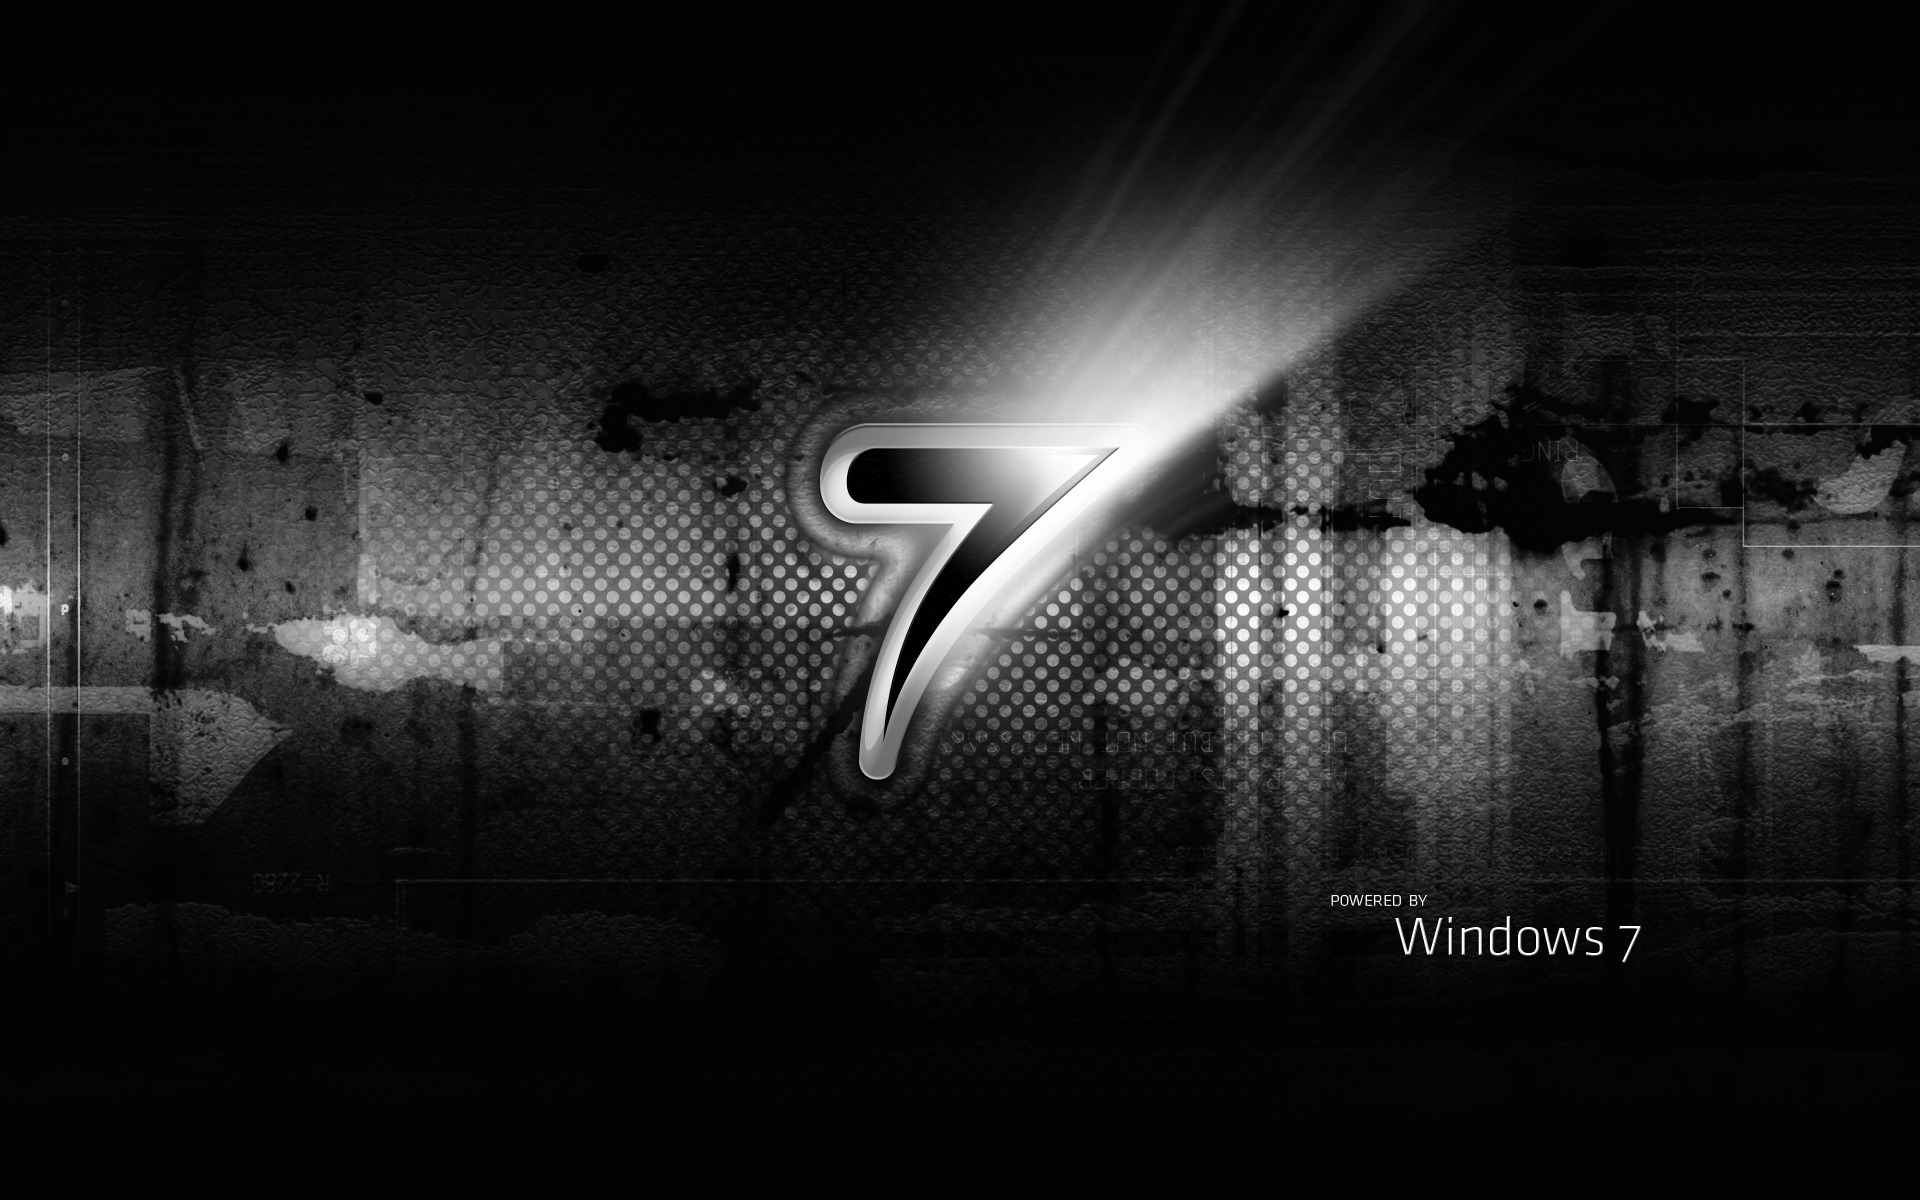 Windows 7 Black Wallpaper Picture for Desktop - Uncalke.com